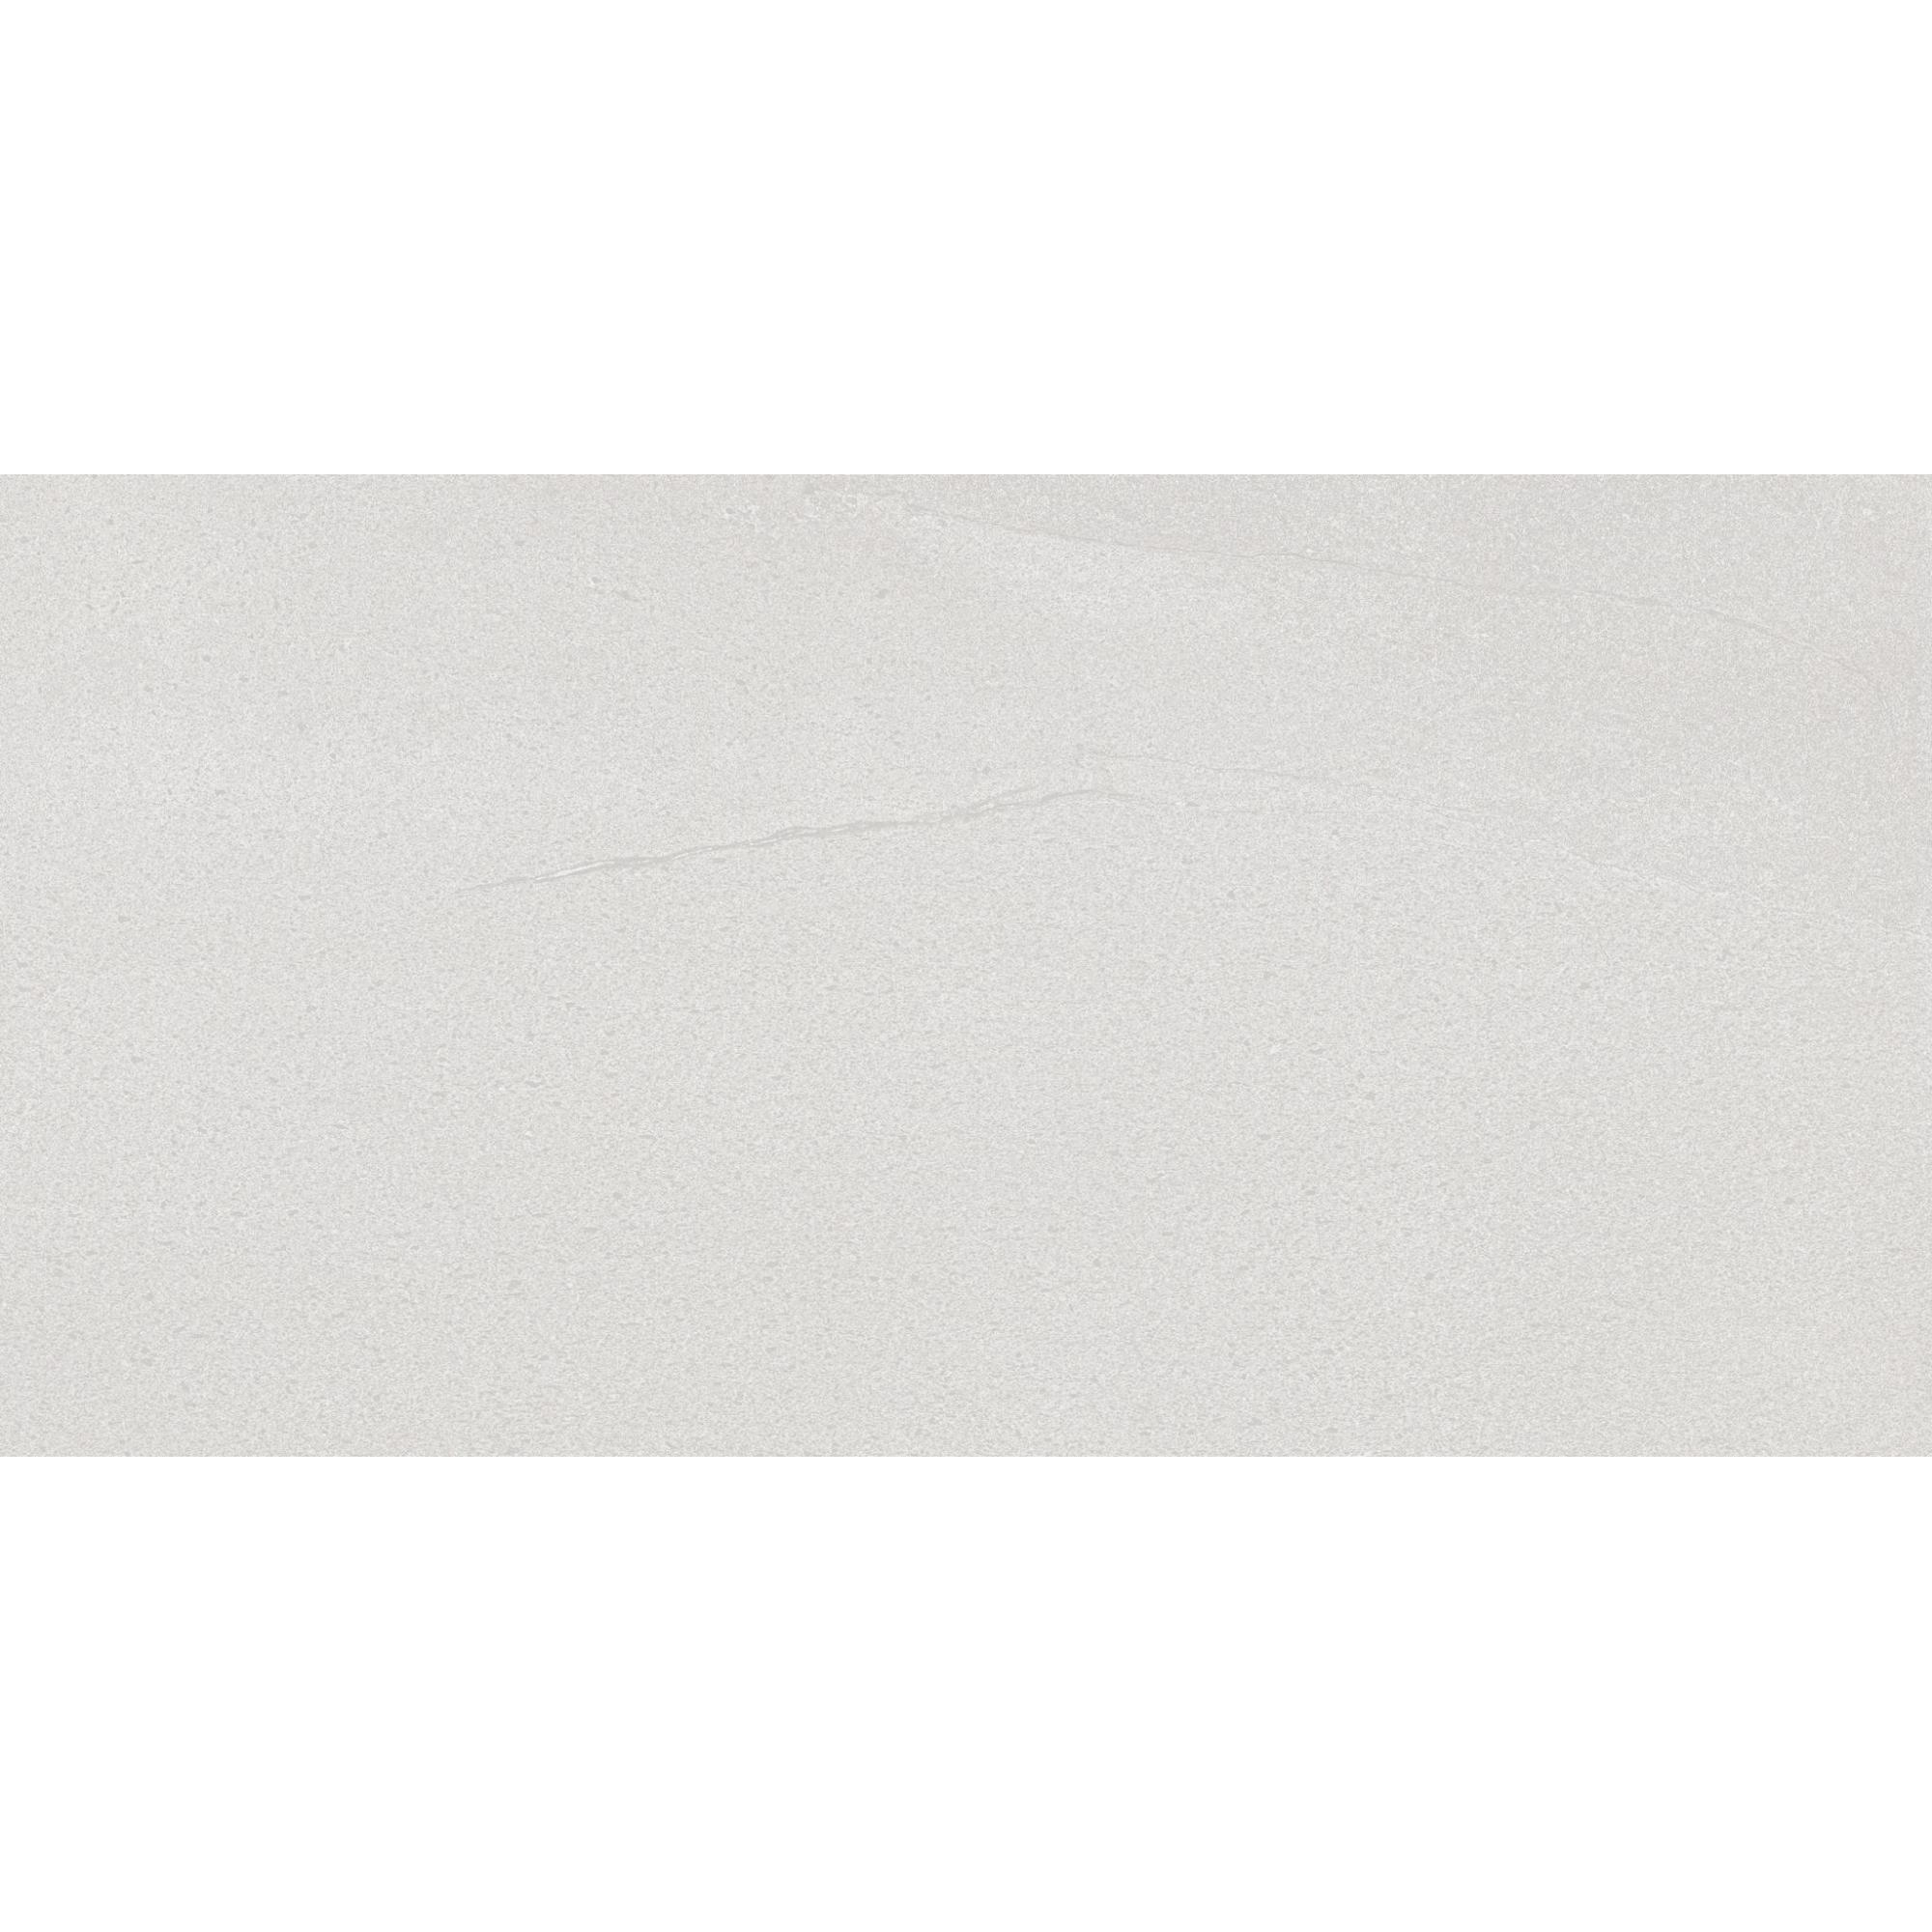 Wandfliese 'Element' Steingut weiß 30 x 60 cm + product picture